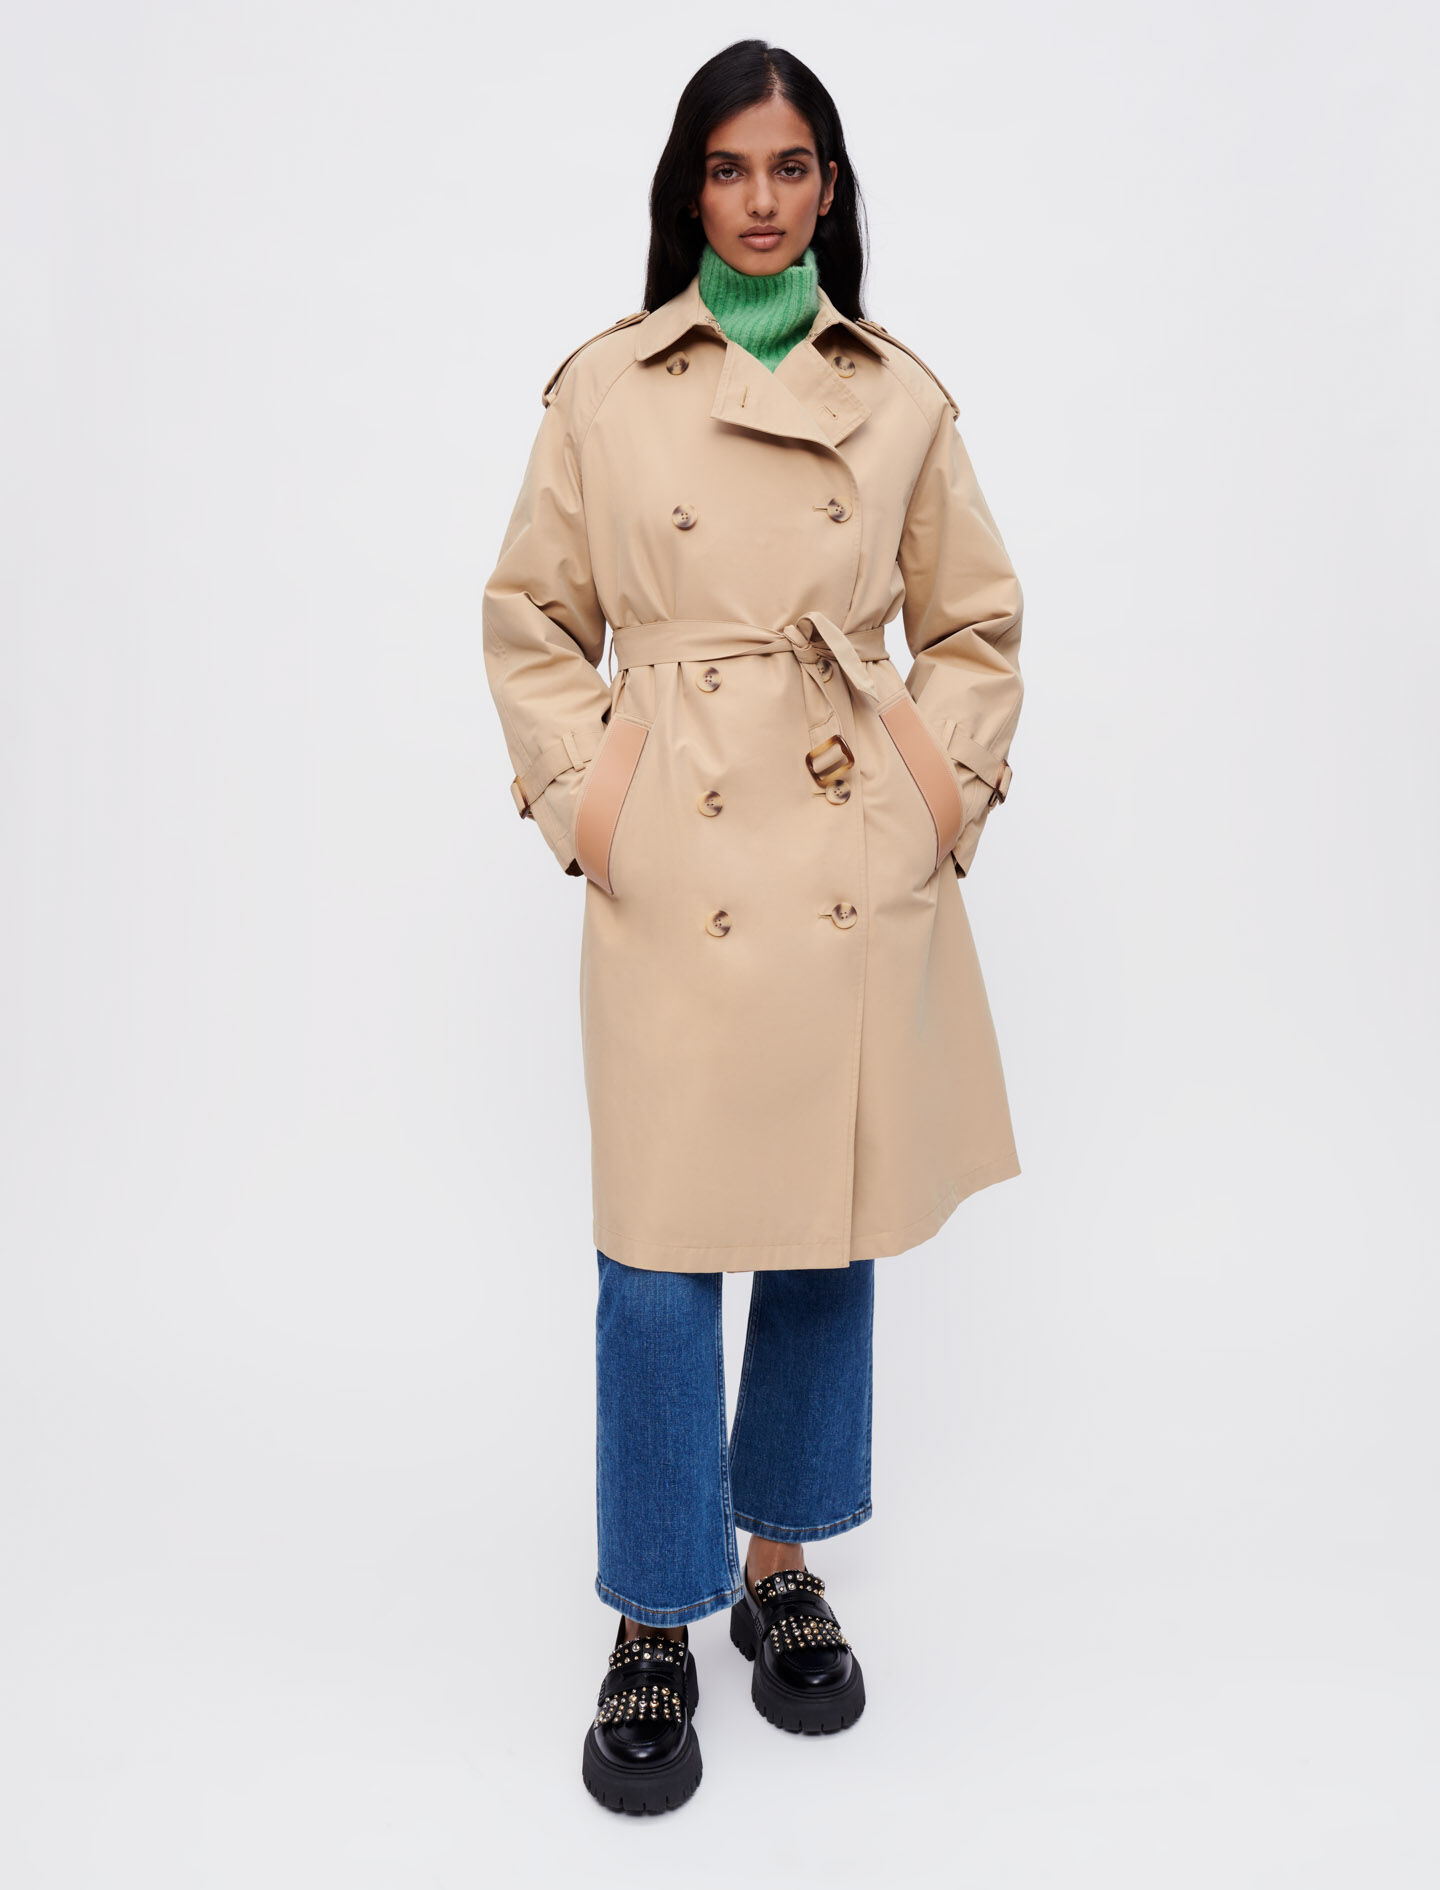 Zara Trench coat WOMEN FASHION Coats Trench coat Knitted discount 64% Black S 